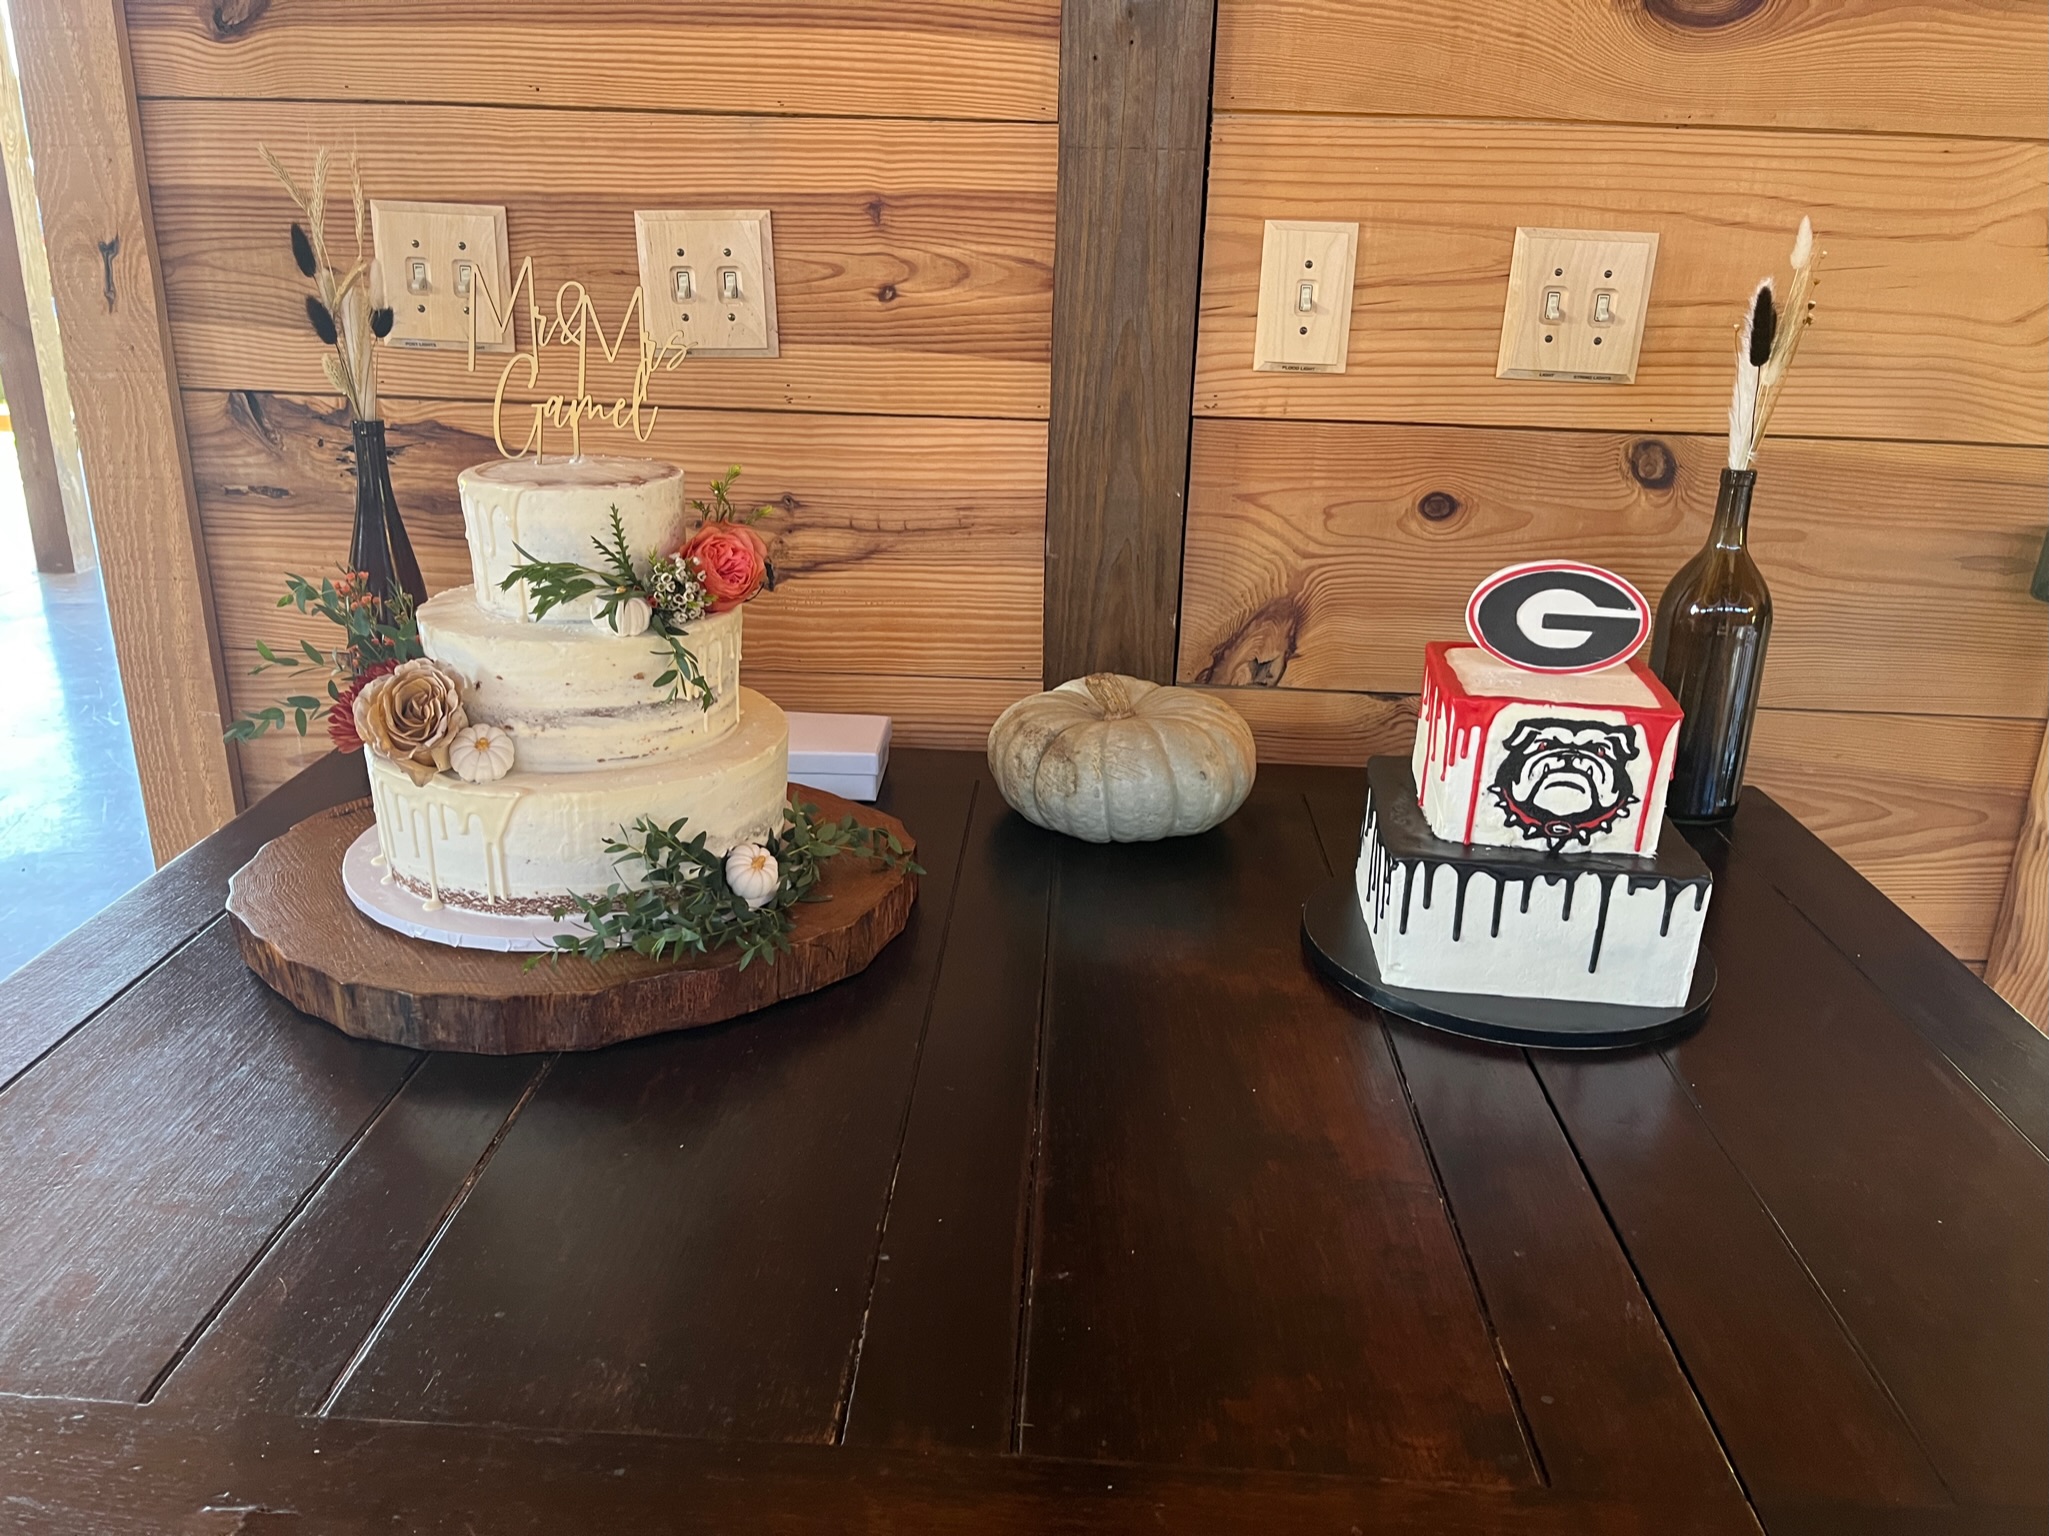 Bridal & groom cake set up